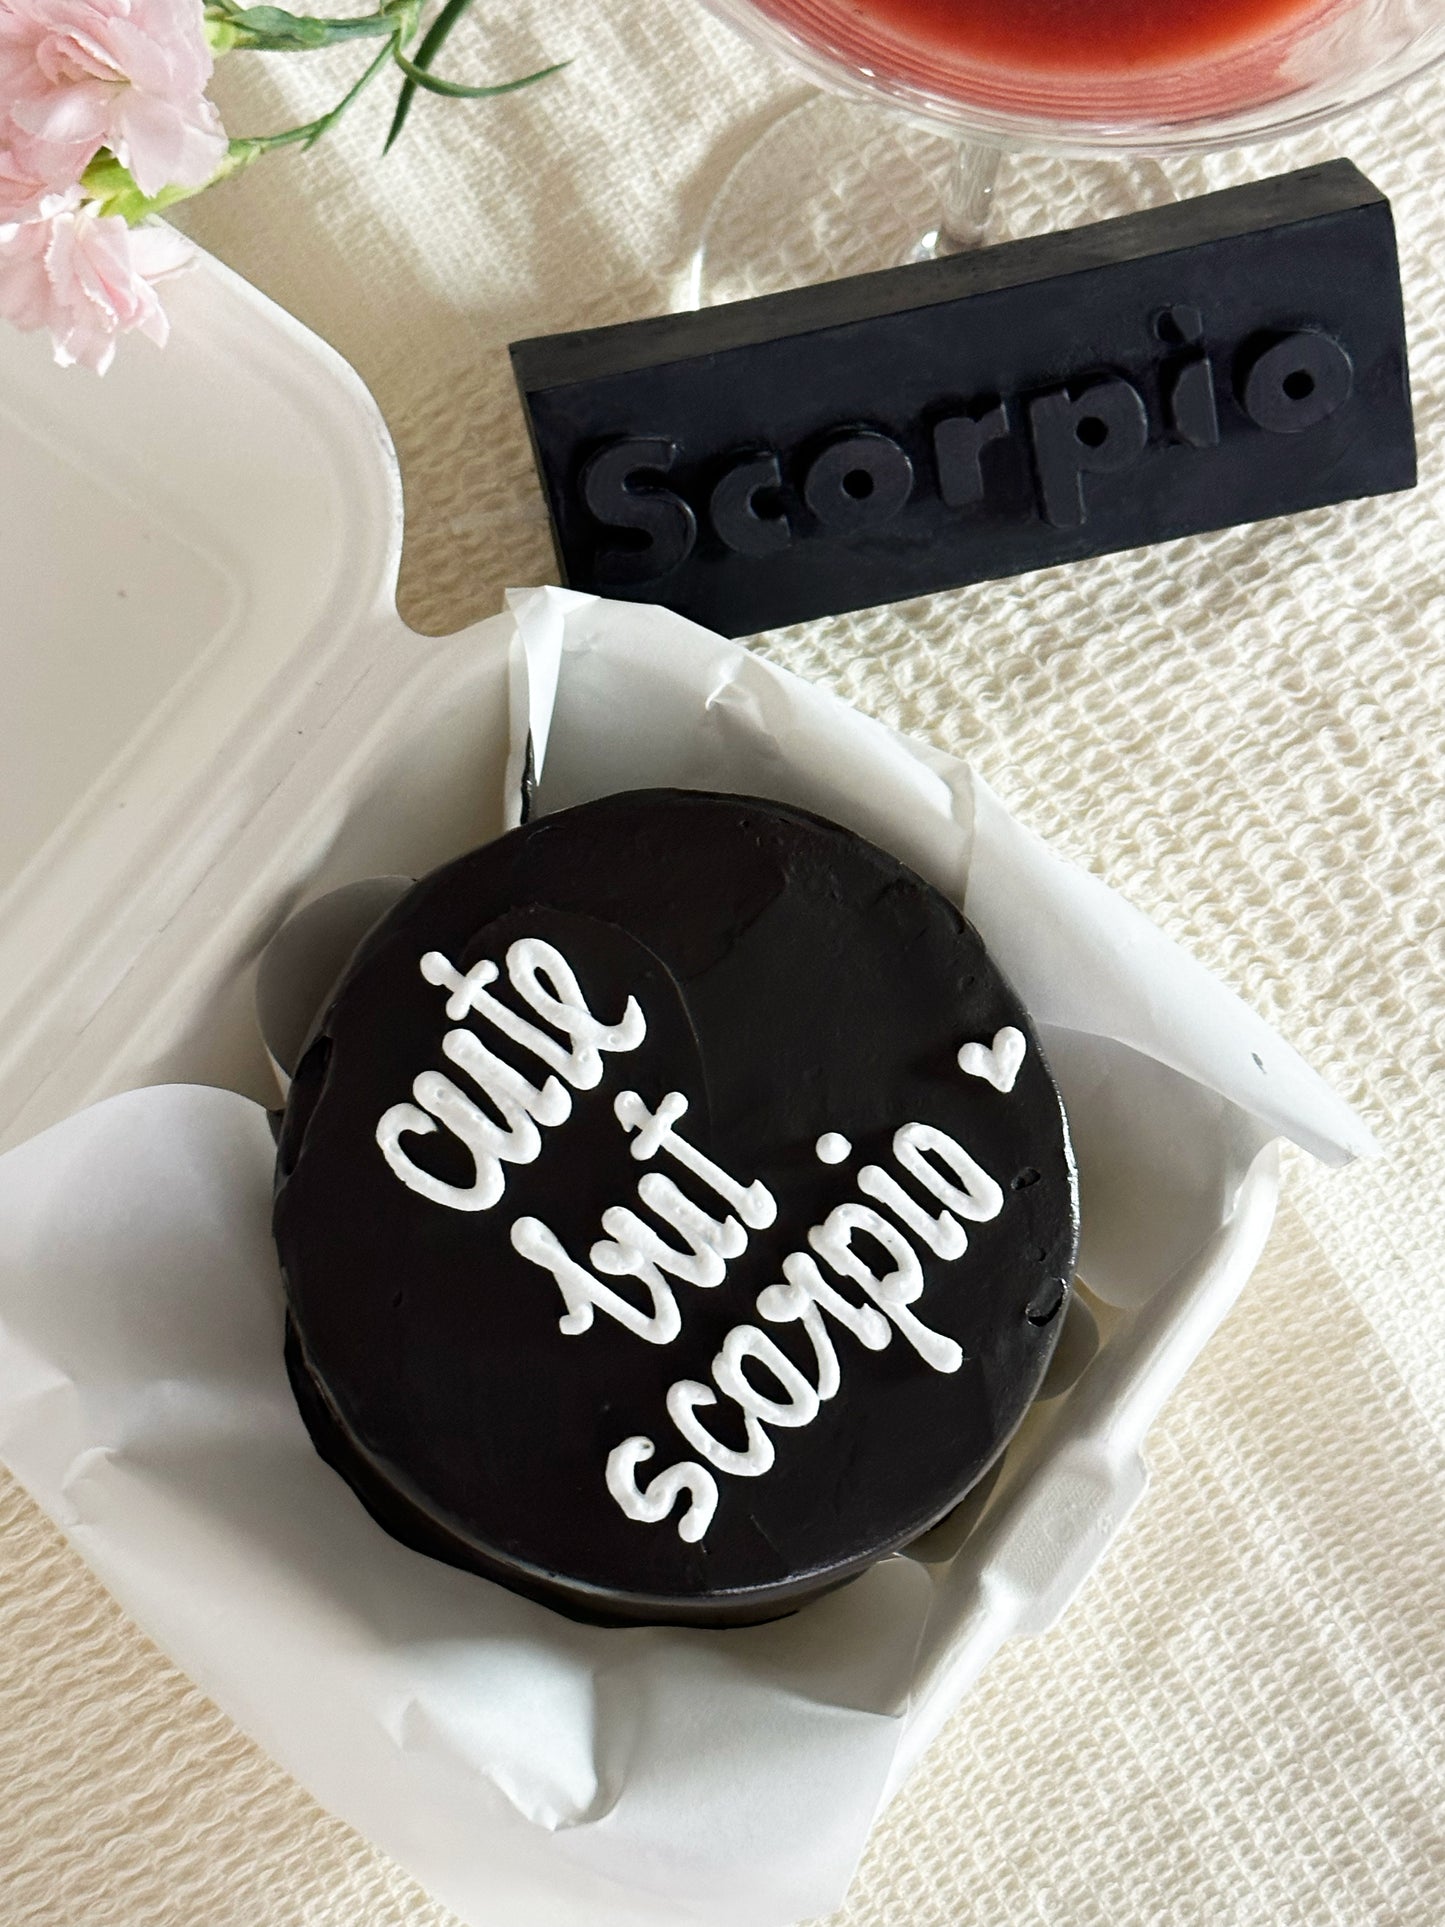 Scorpio Cake + Candle